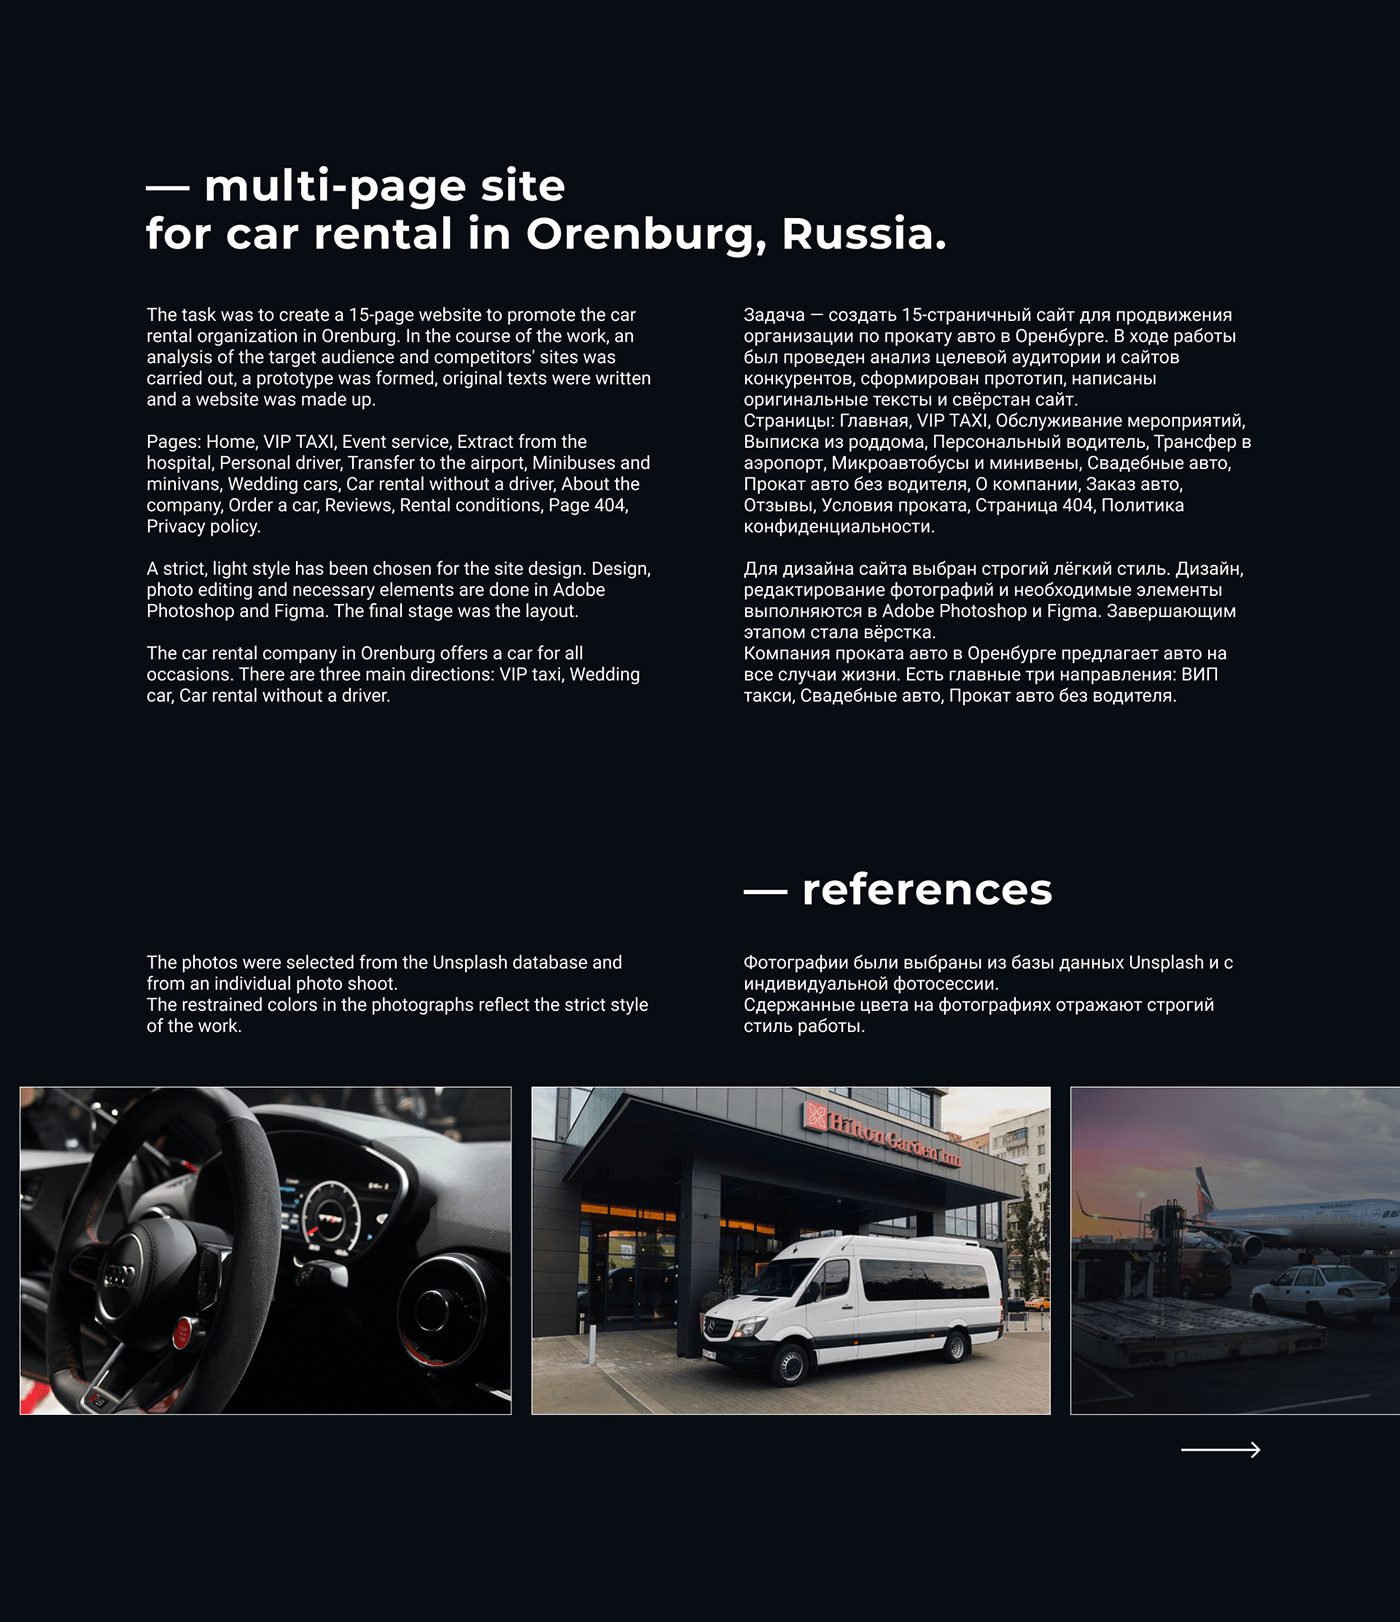 Multi-page site for car rental in Orenburg, Russia.